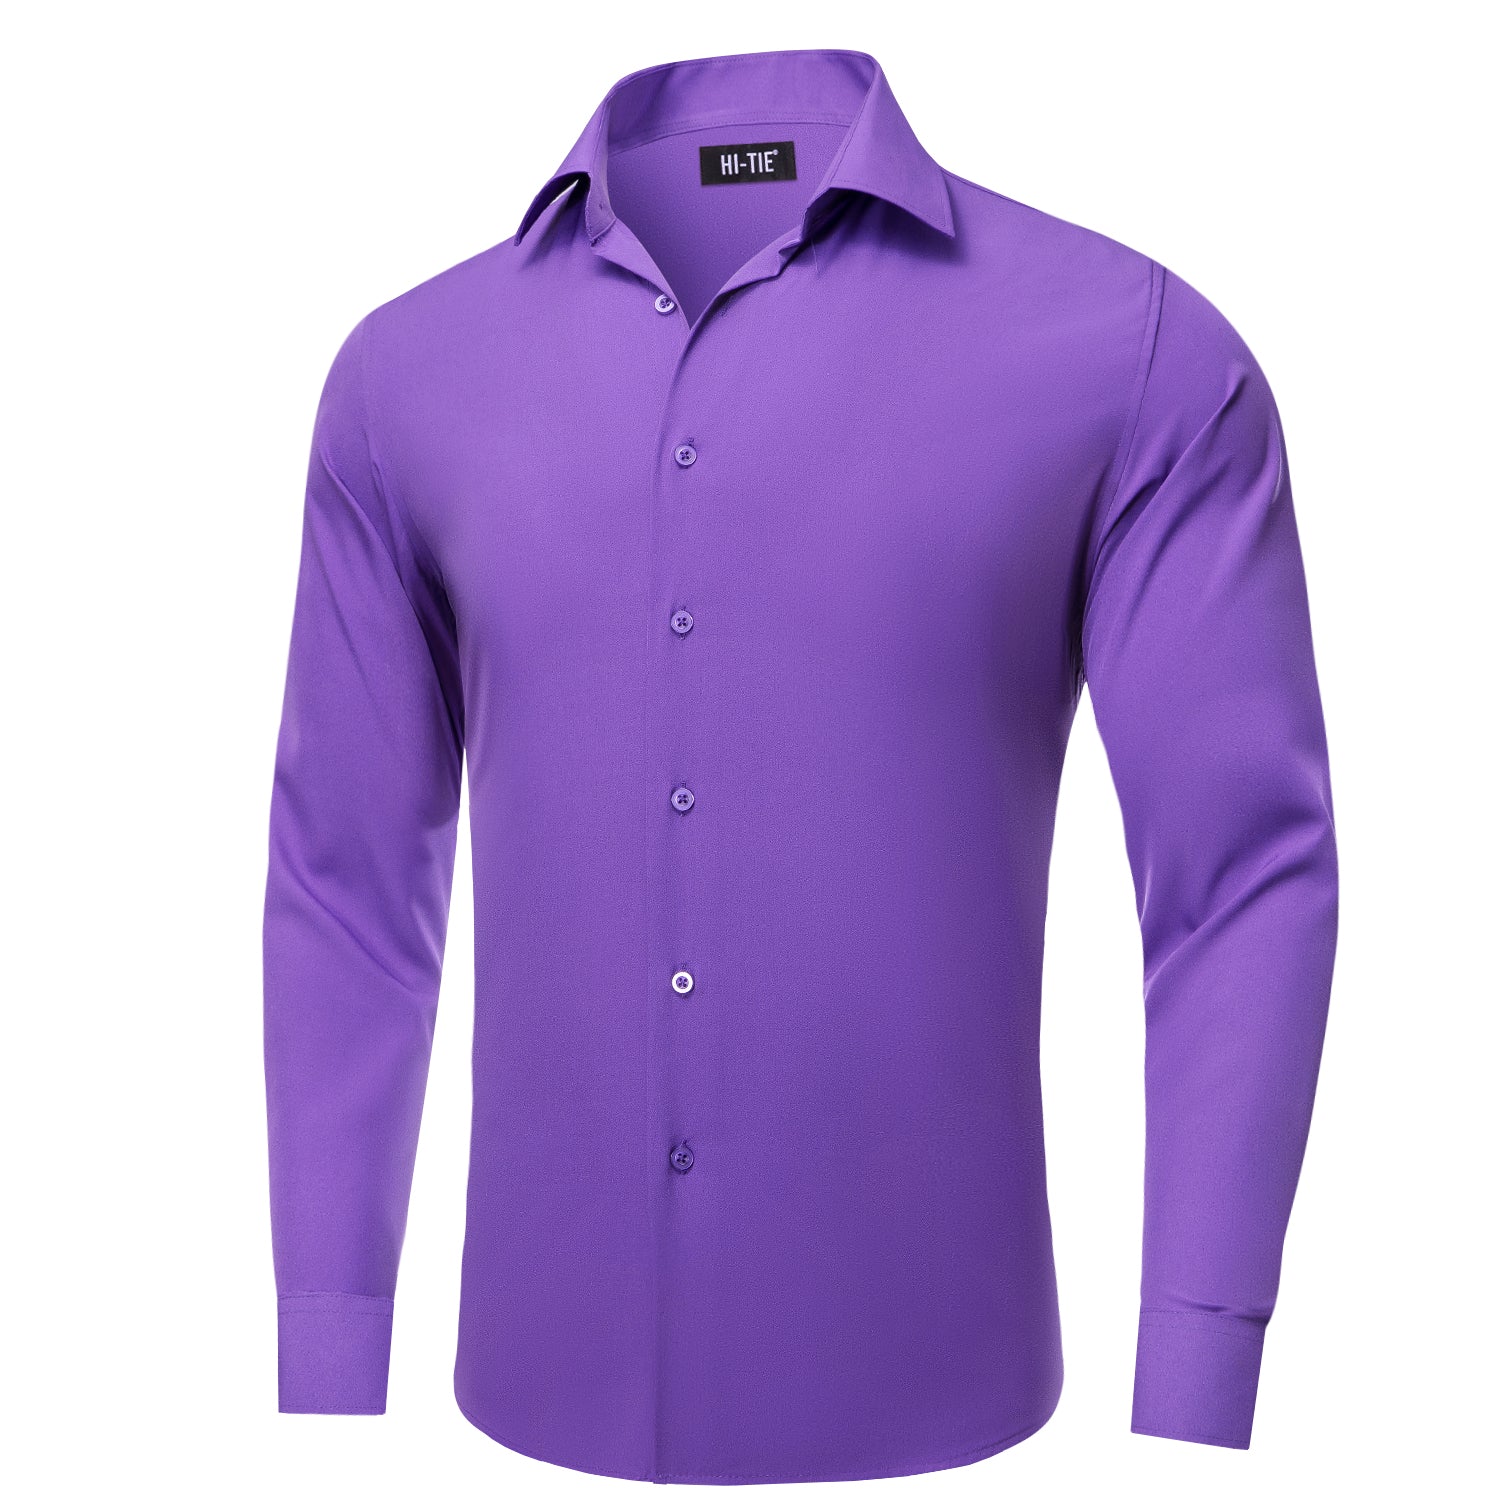 Hi-Tie Long Sleeve Shirt DarkVoilet Purple Solid Casual Men's Dress Shirt Top Wear